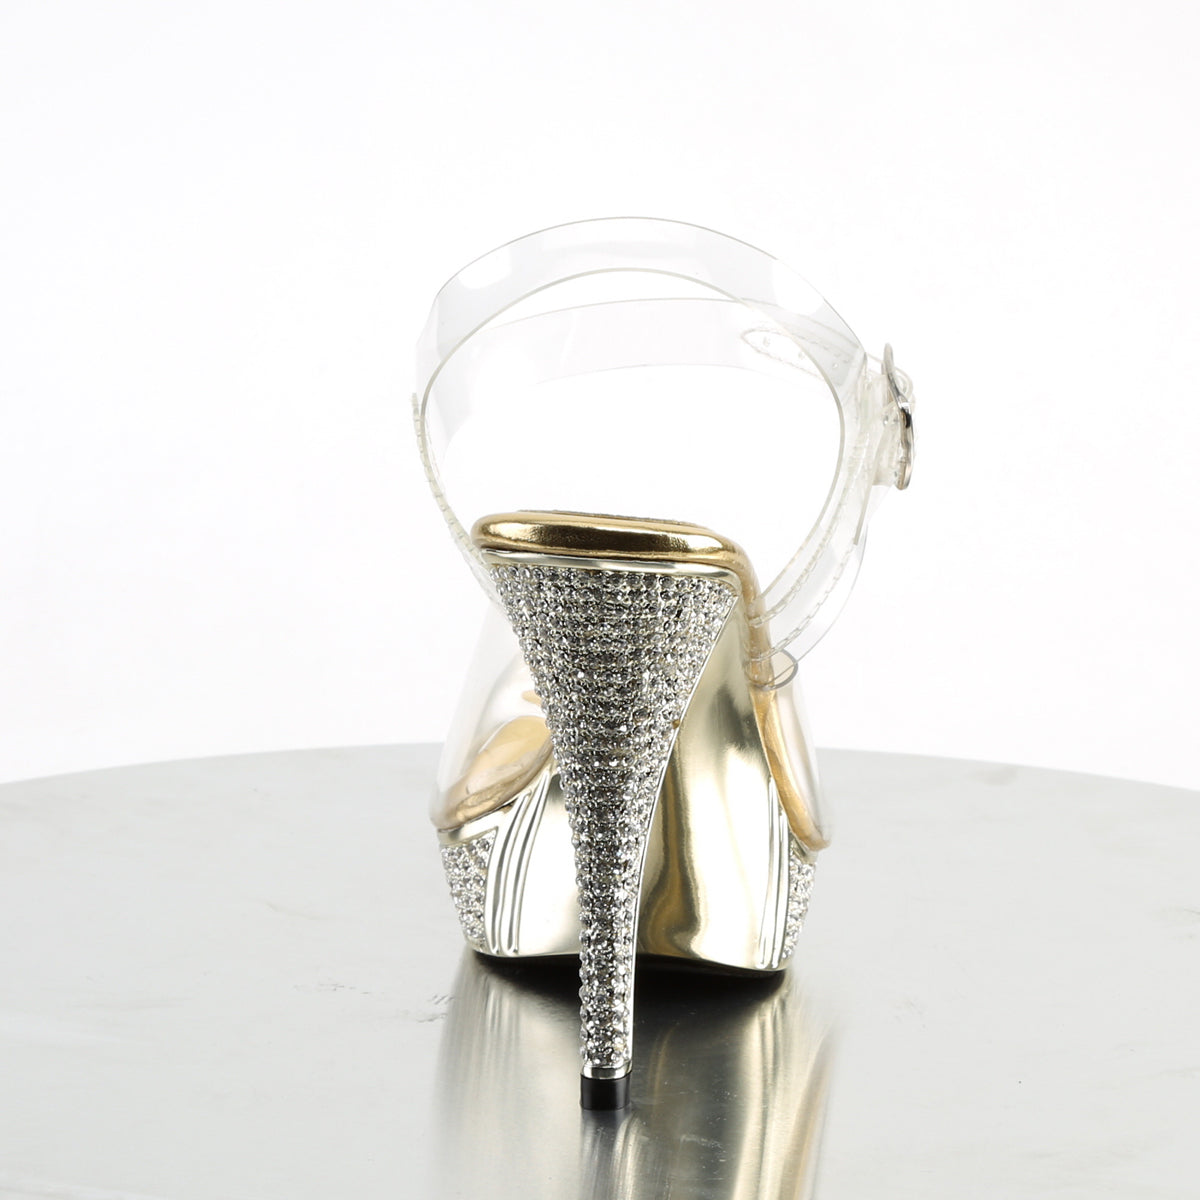 Fabulicious Womens Sandals ELEGANT-408 Clr/Gold Chrome